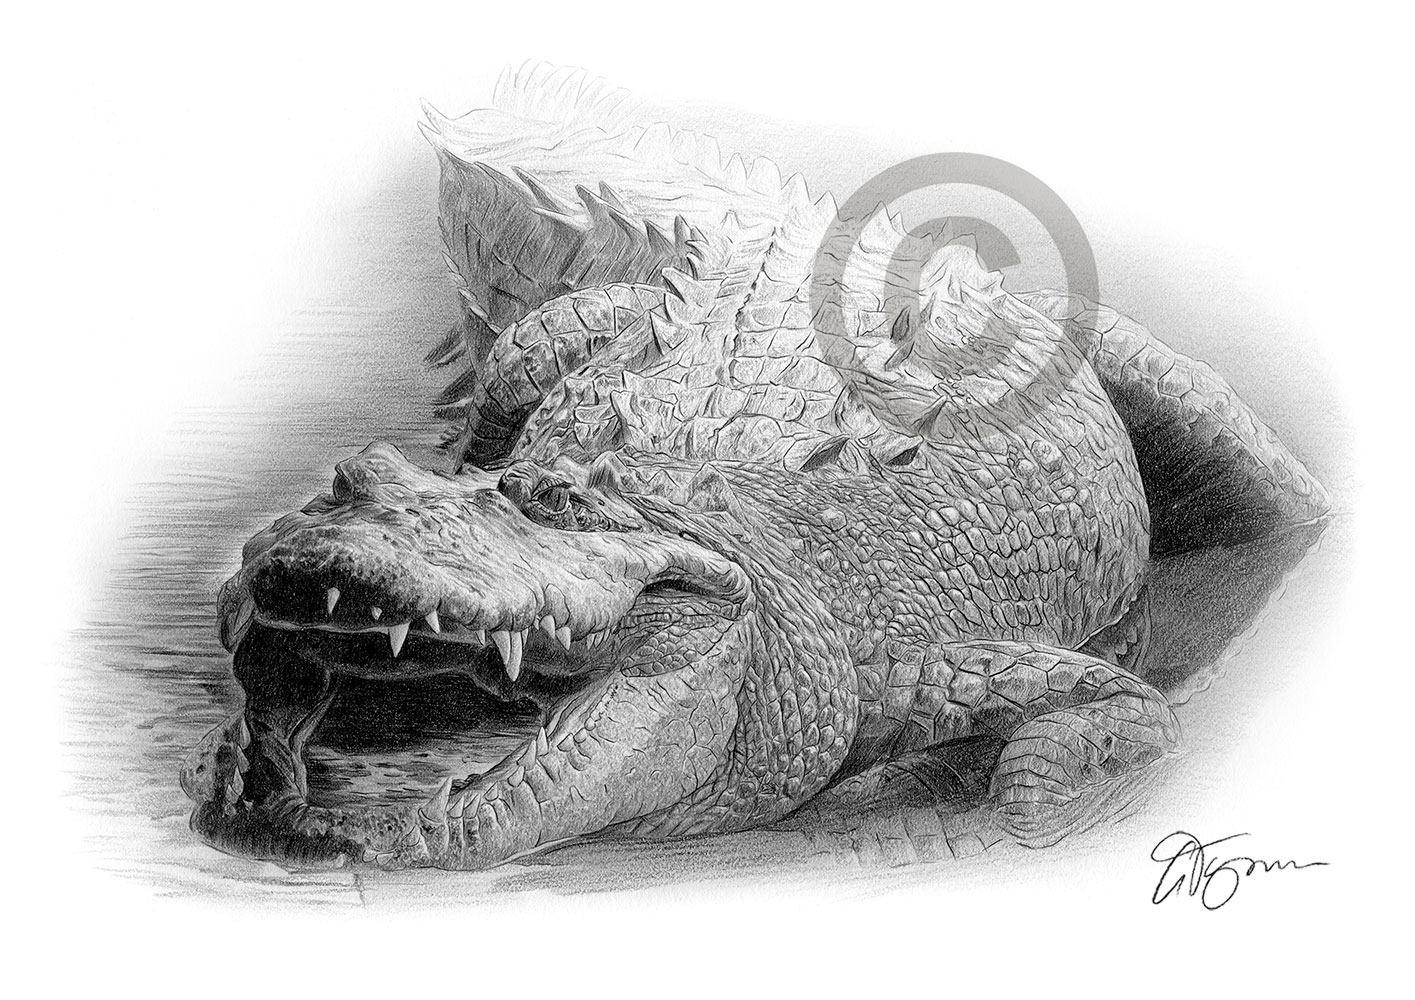 Pencil drawing of a crocodile by artist Gary Tymon